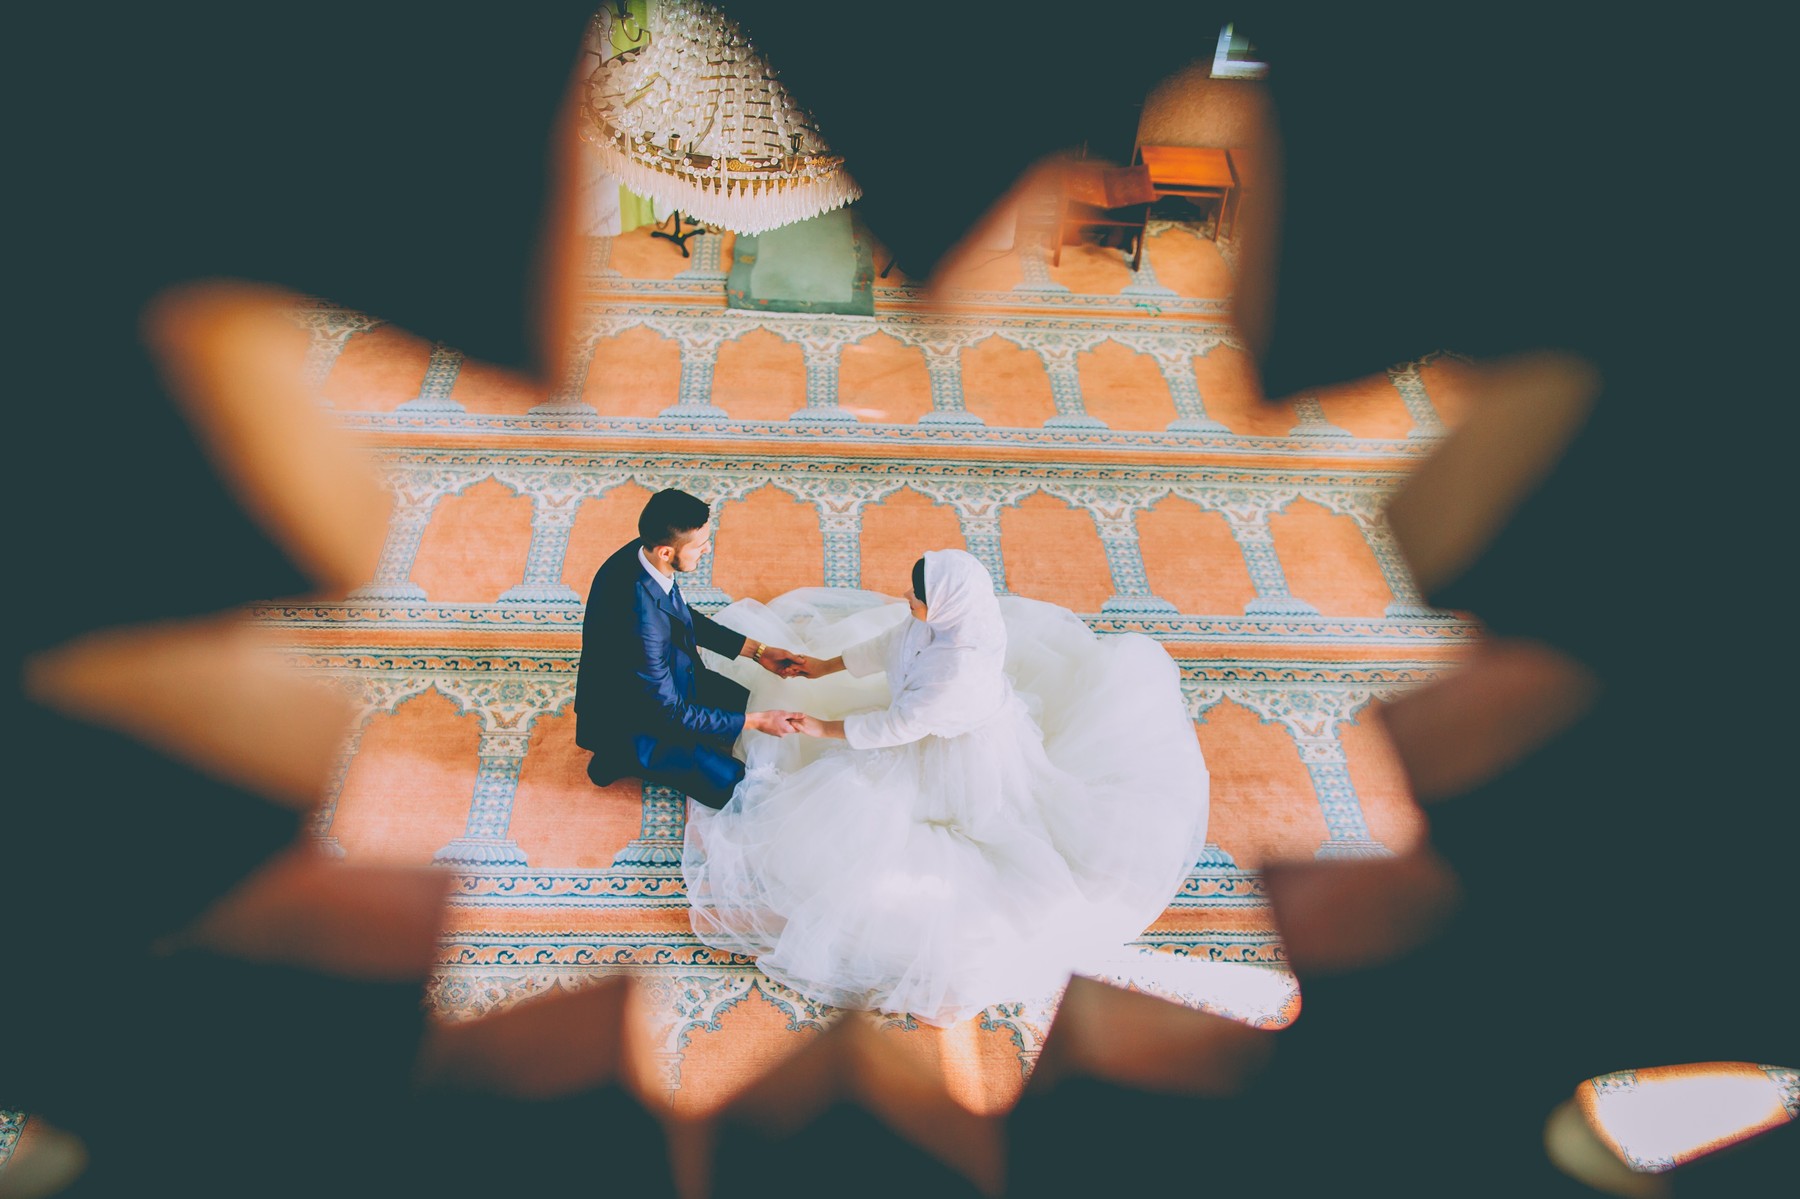 Muslim Wedding | Ramiz Deedakovic on Unsplash